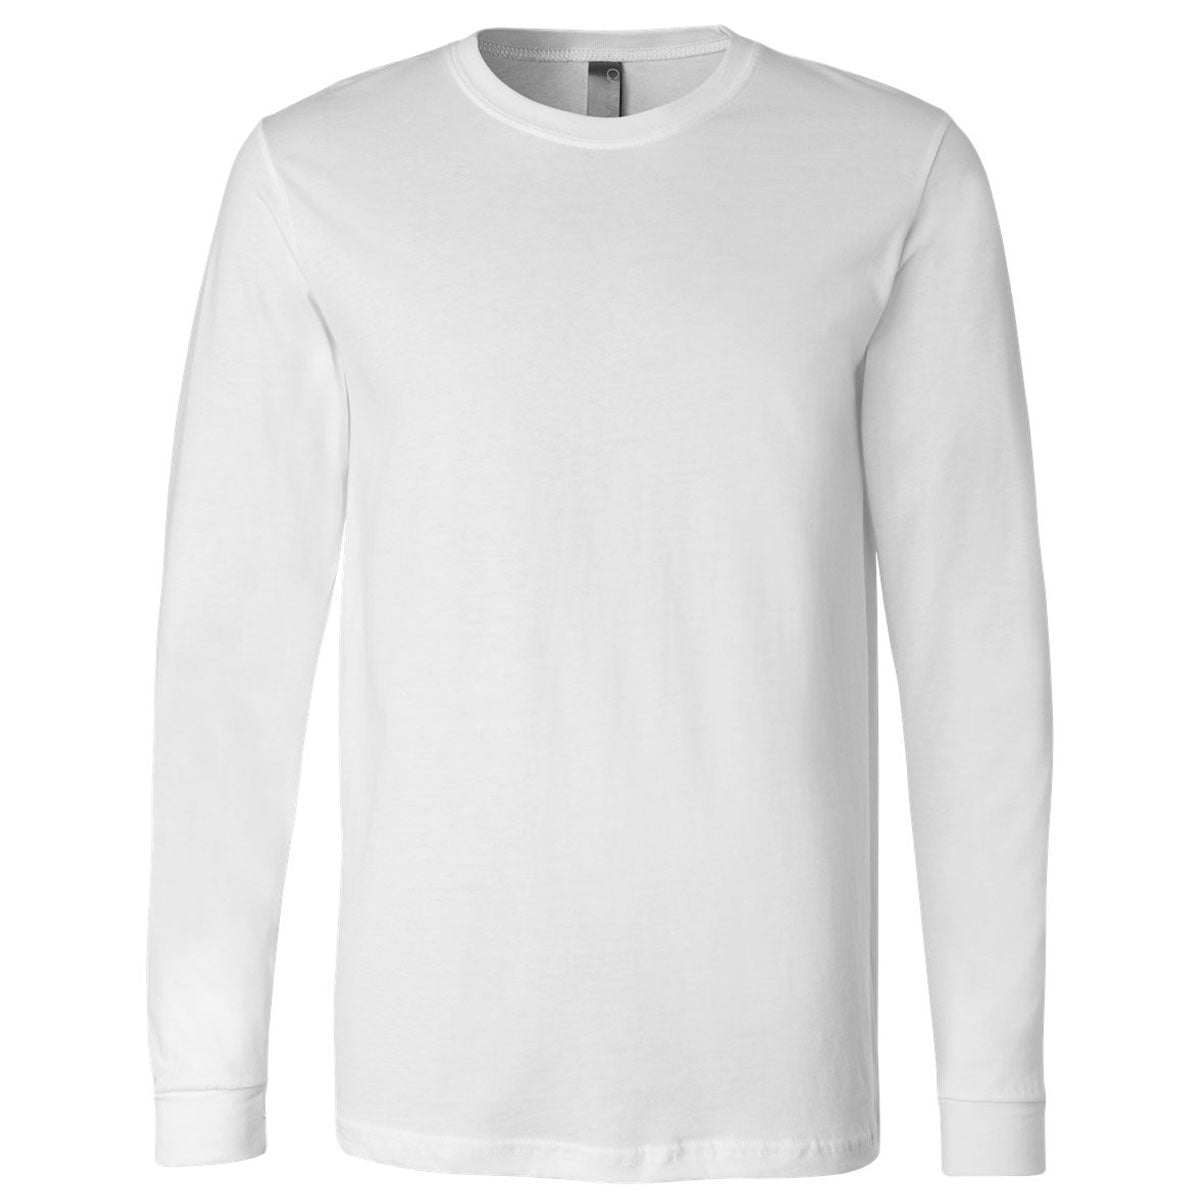 Velo BB - Velocity Baseball Triangle - White (Tee/Hoodie/Sweatshirt) - Southern Grace Creations